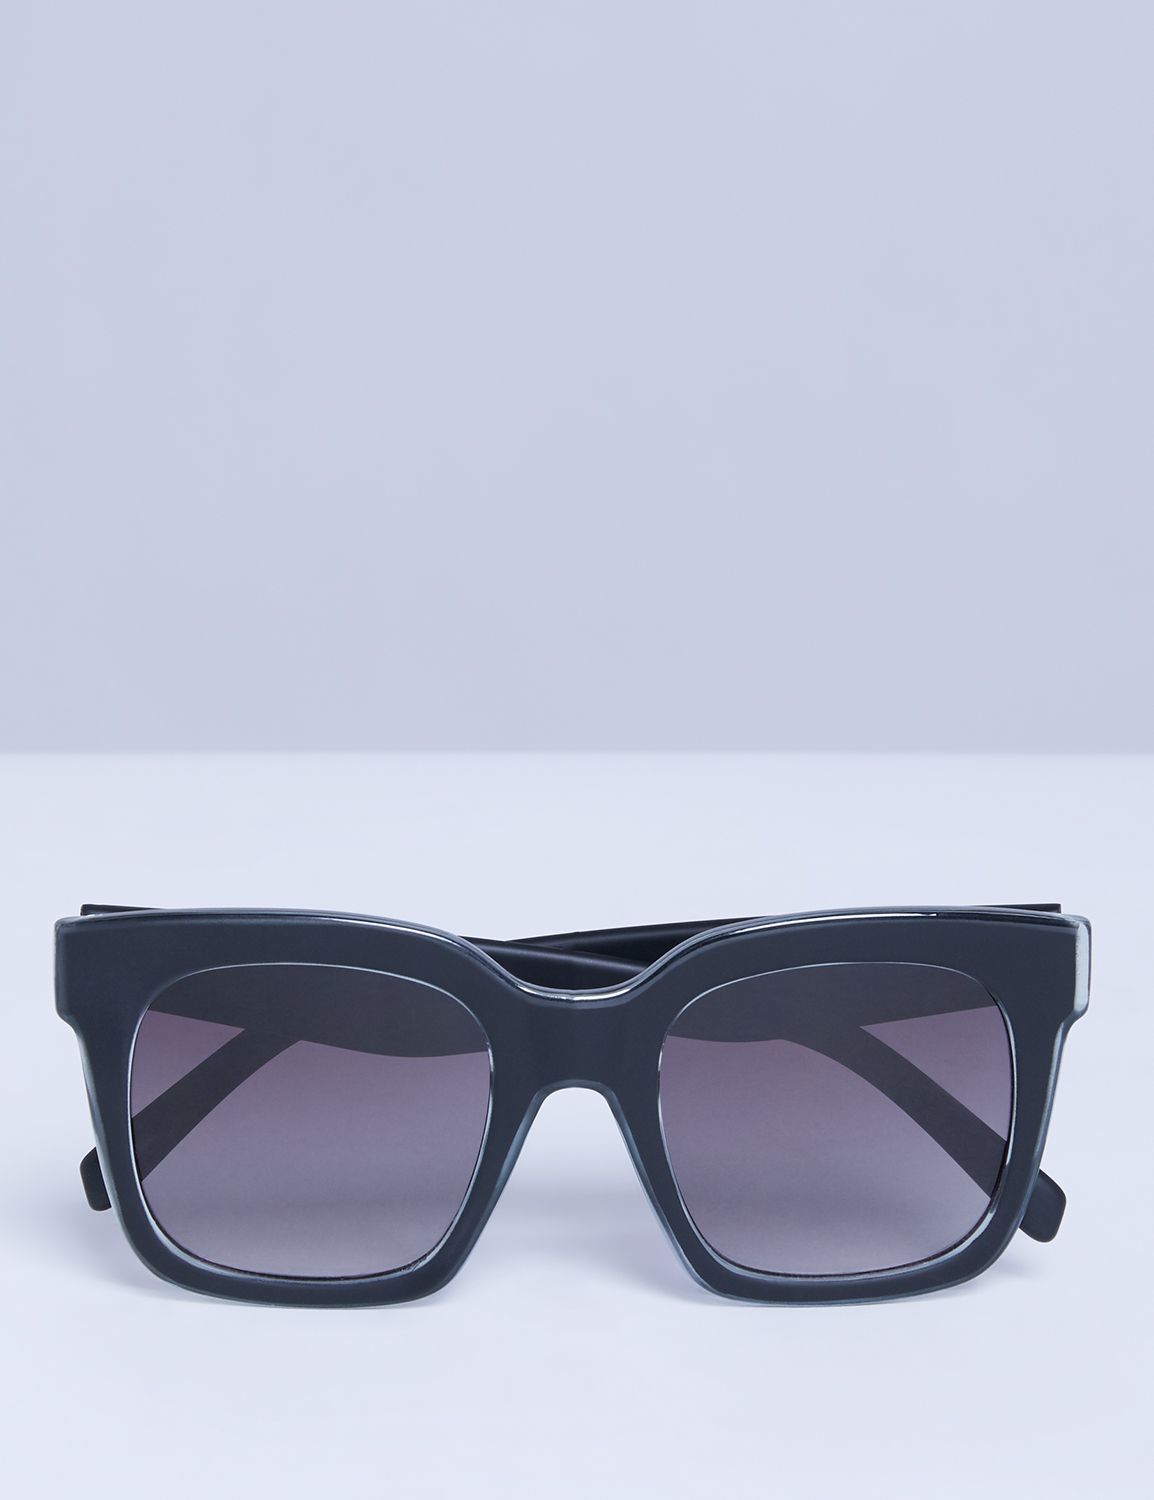 Trendy Women's Sunglasses | Lane Bryant